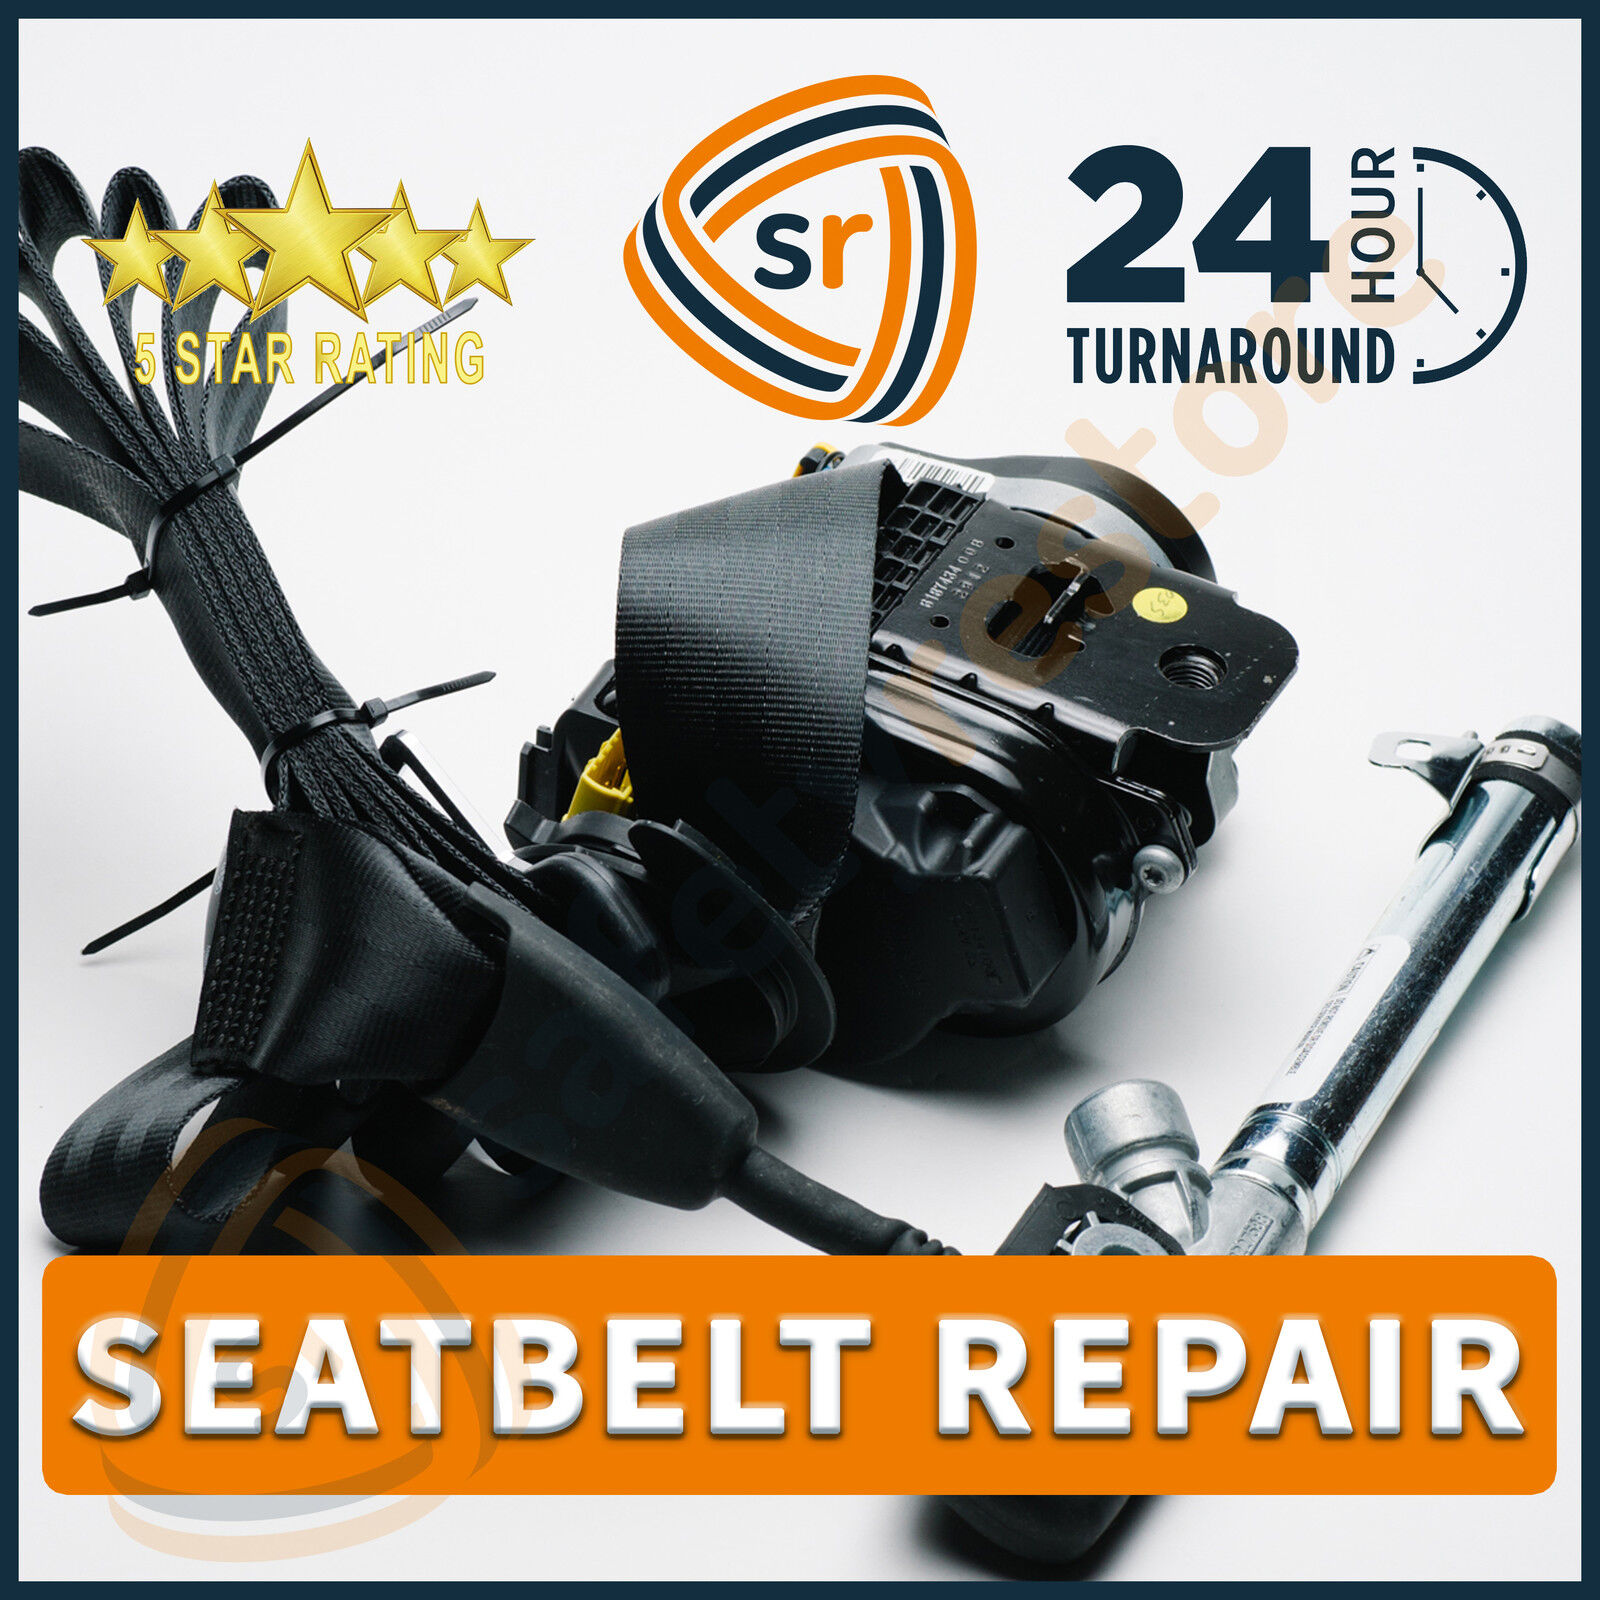 For NISSAN Rogue Dual-Stage Seat Belt Rebuild Repair Service Locked Belt Fix